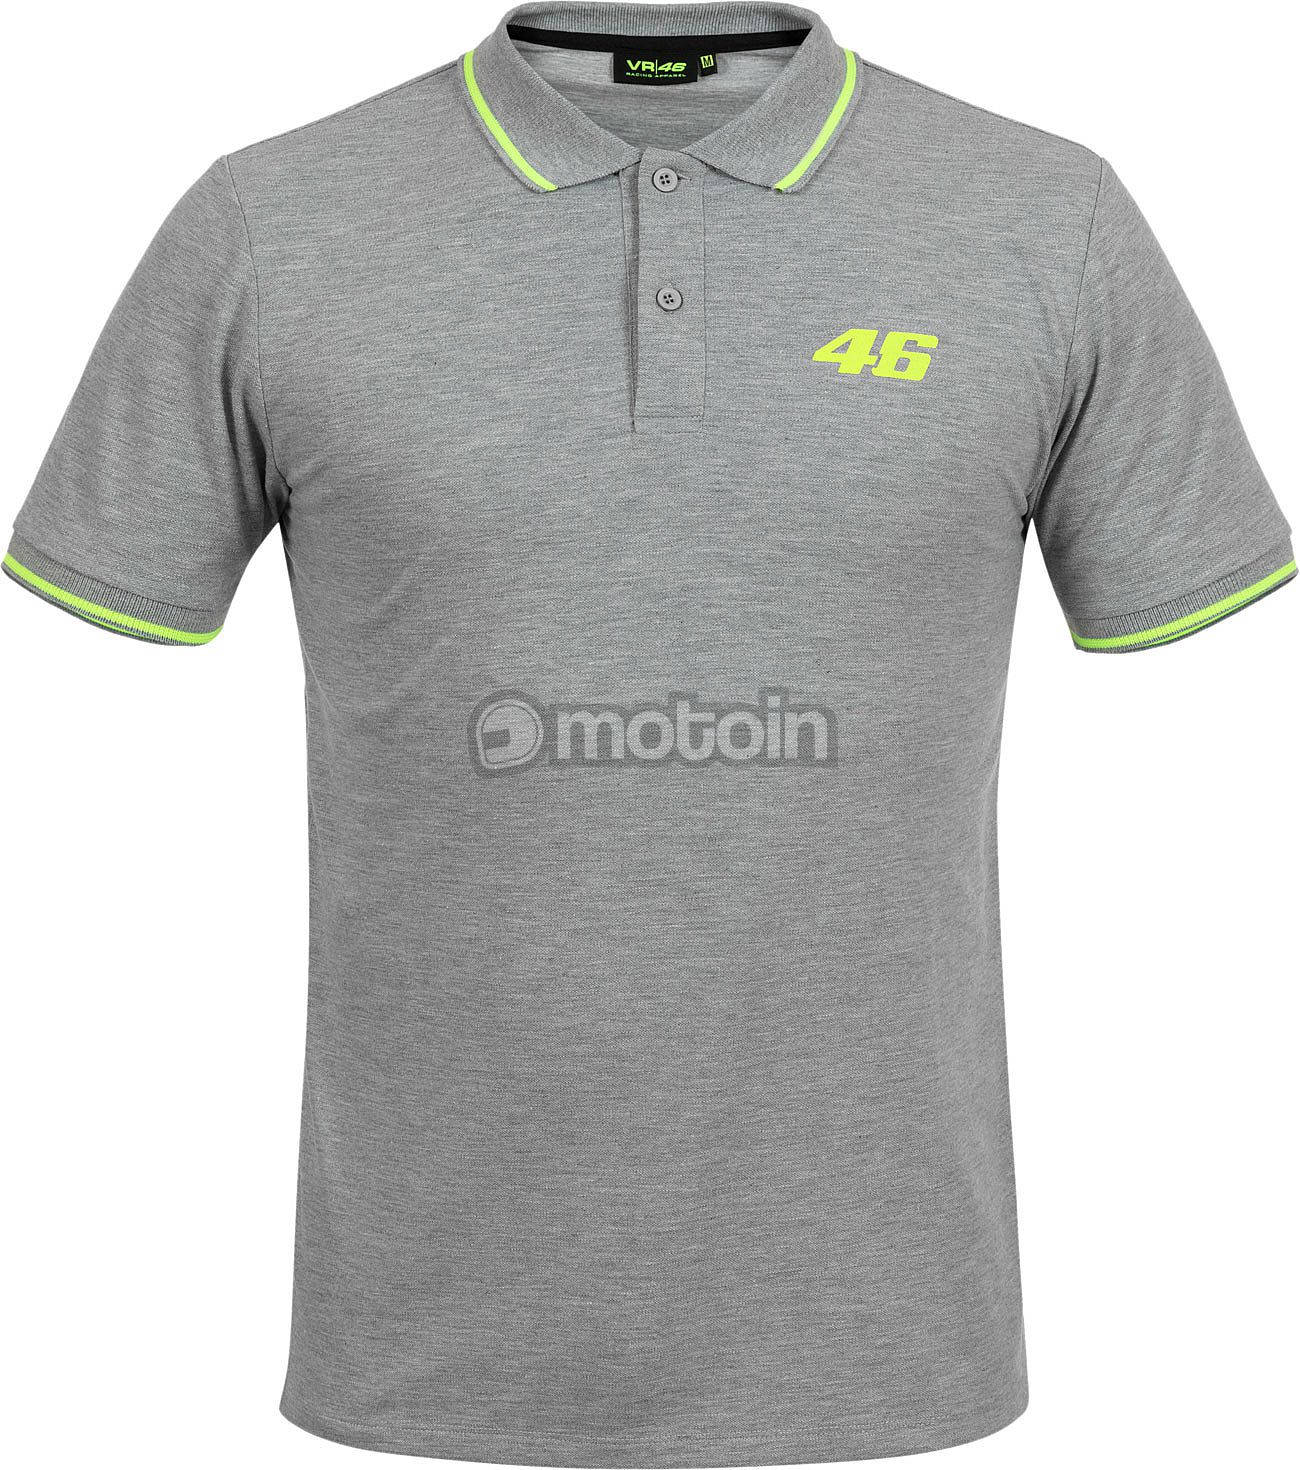 VR46 Racing Apparel Core Collection, Polo-Shirt